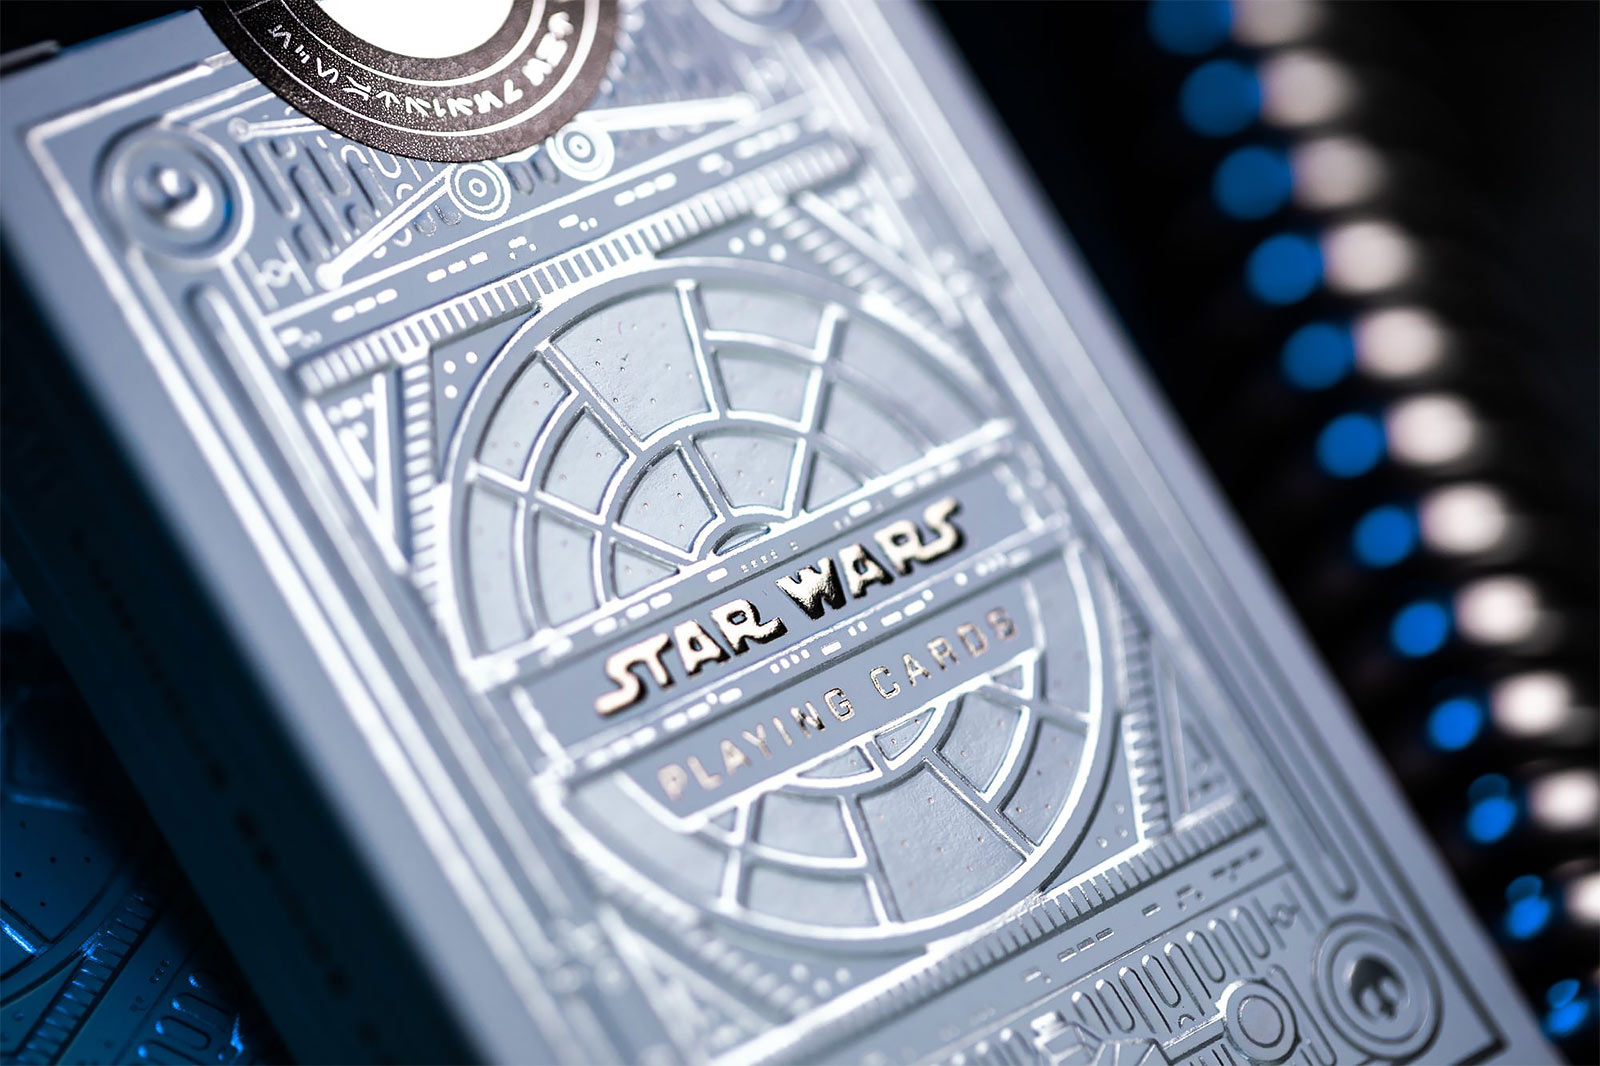 Star Wars - Light Side Kartenspiel Silver Edition